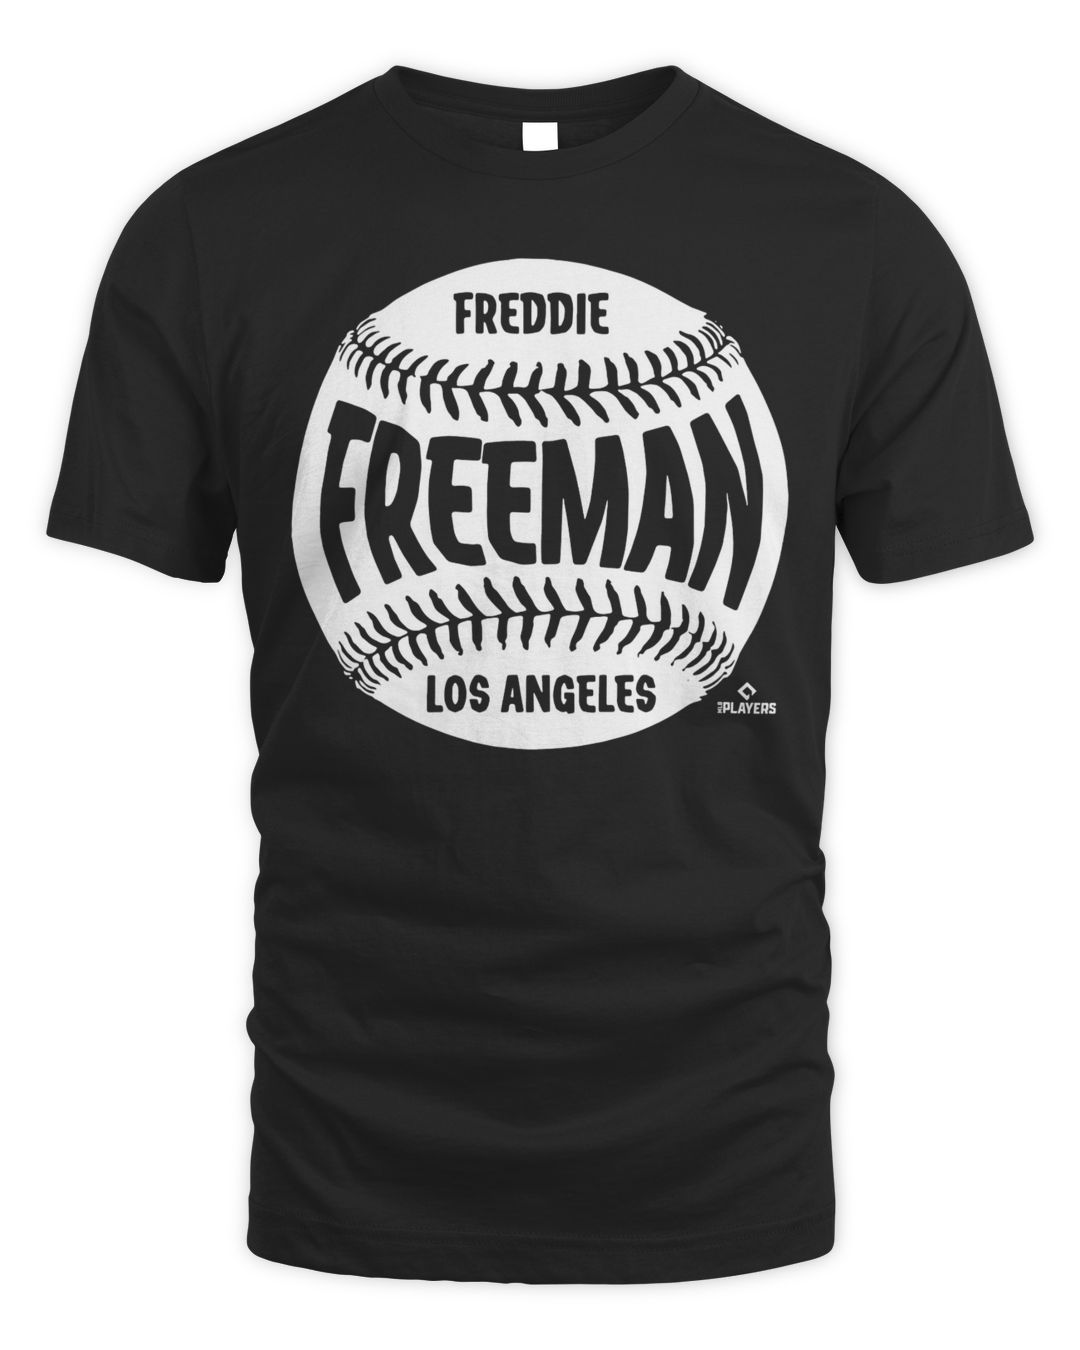 Freddie Freeman Merch Los Angeles D Baseball Shirt